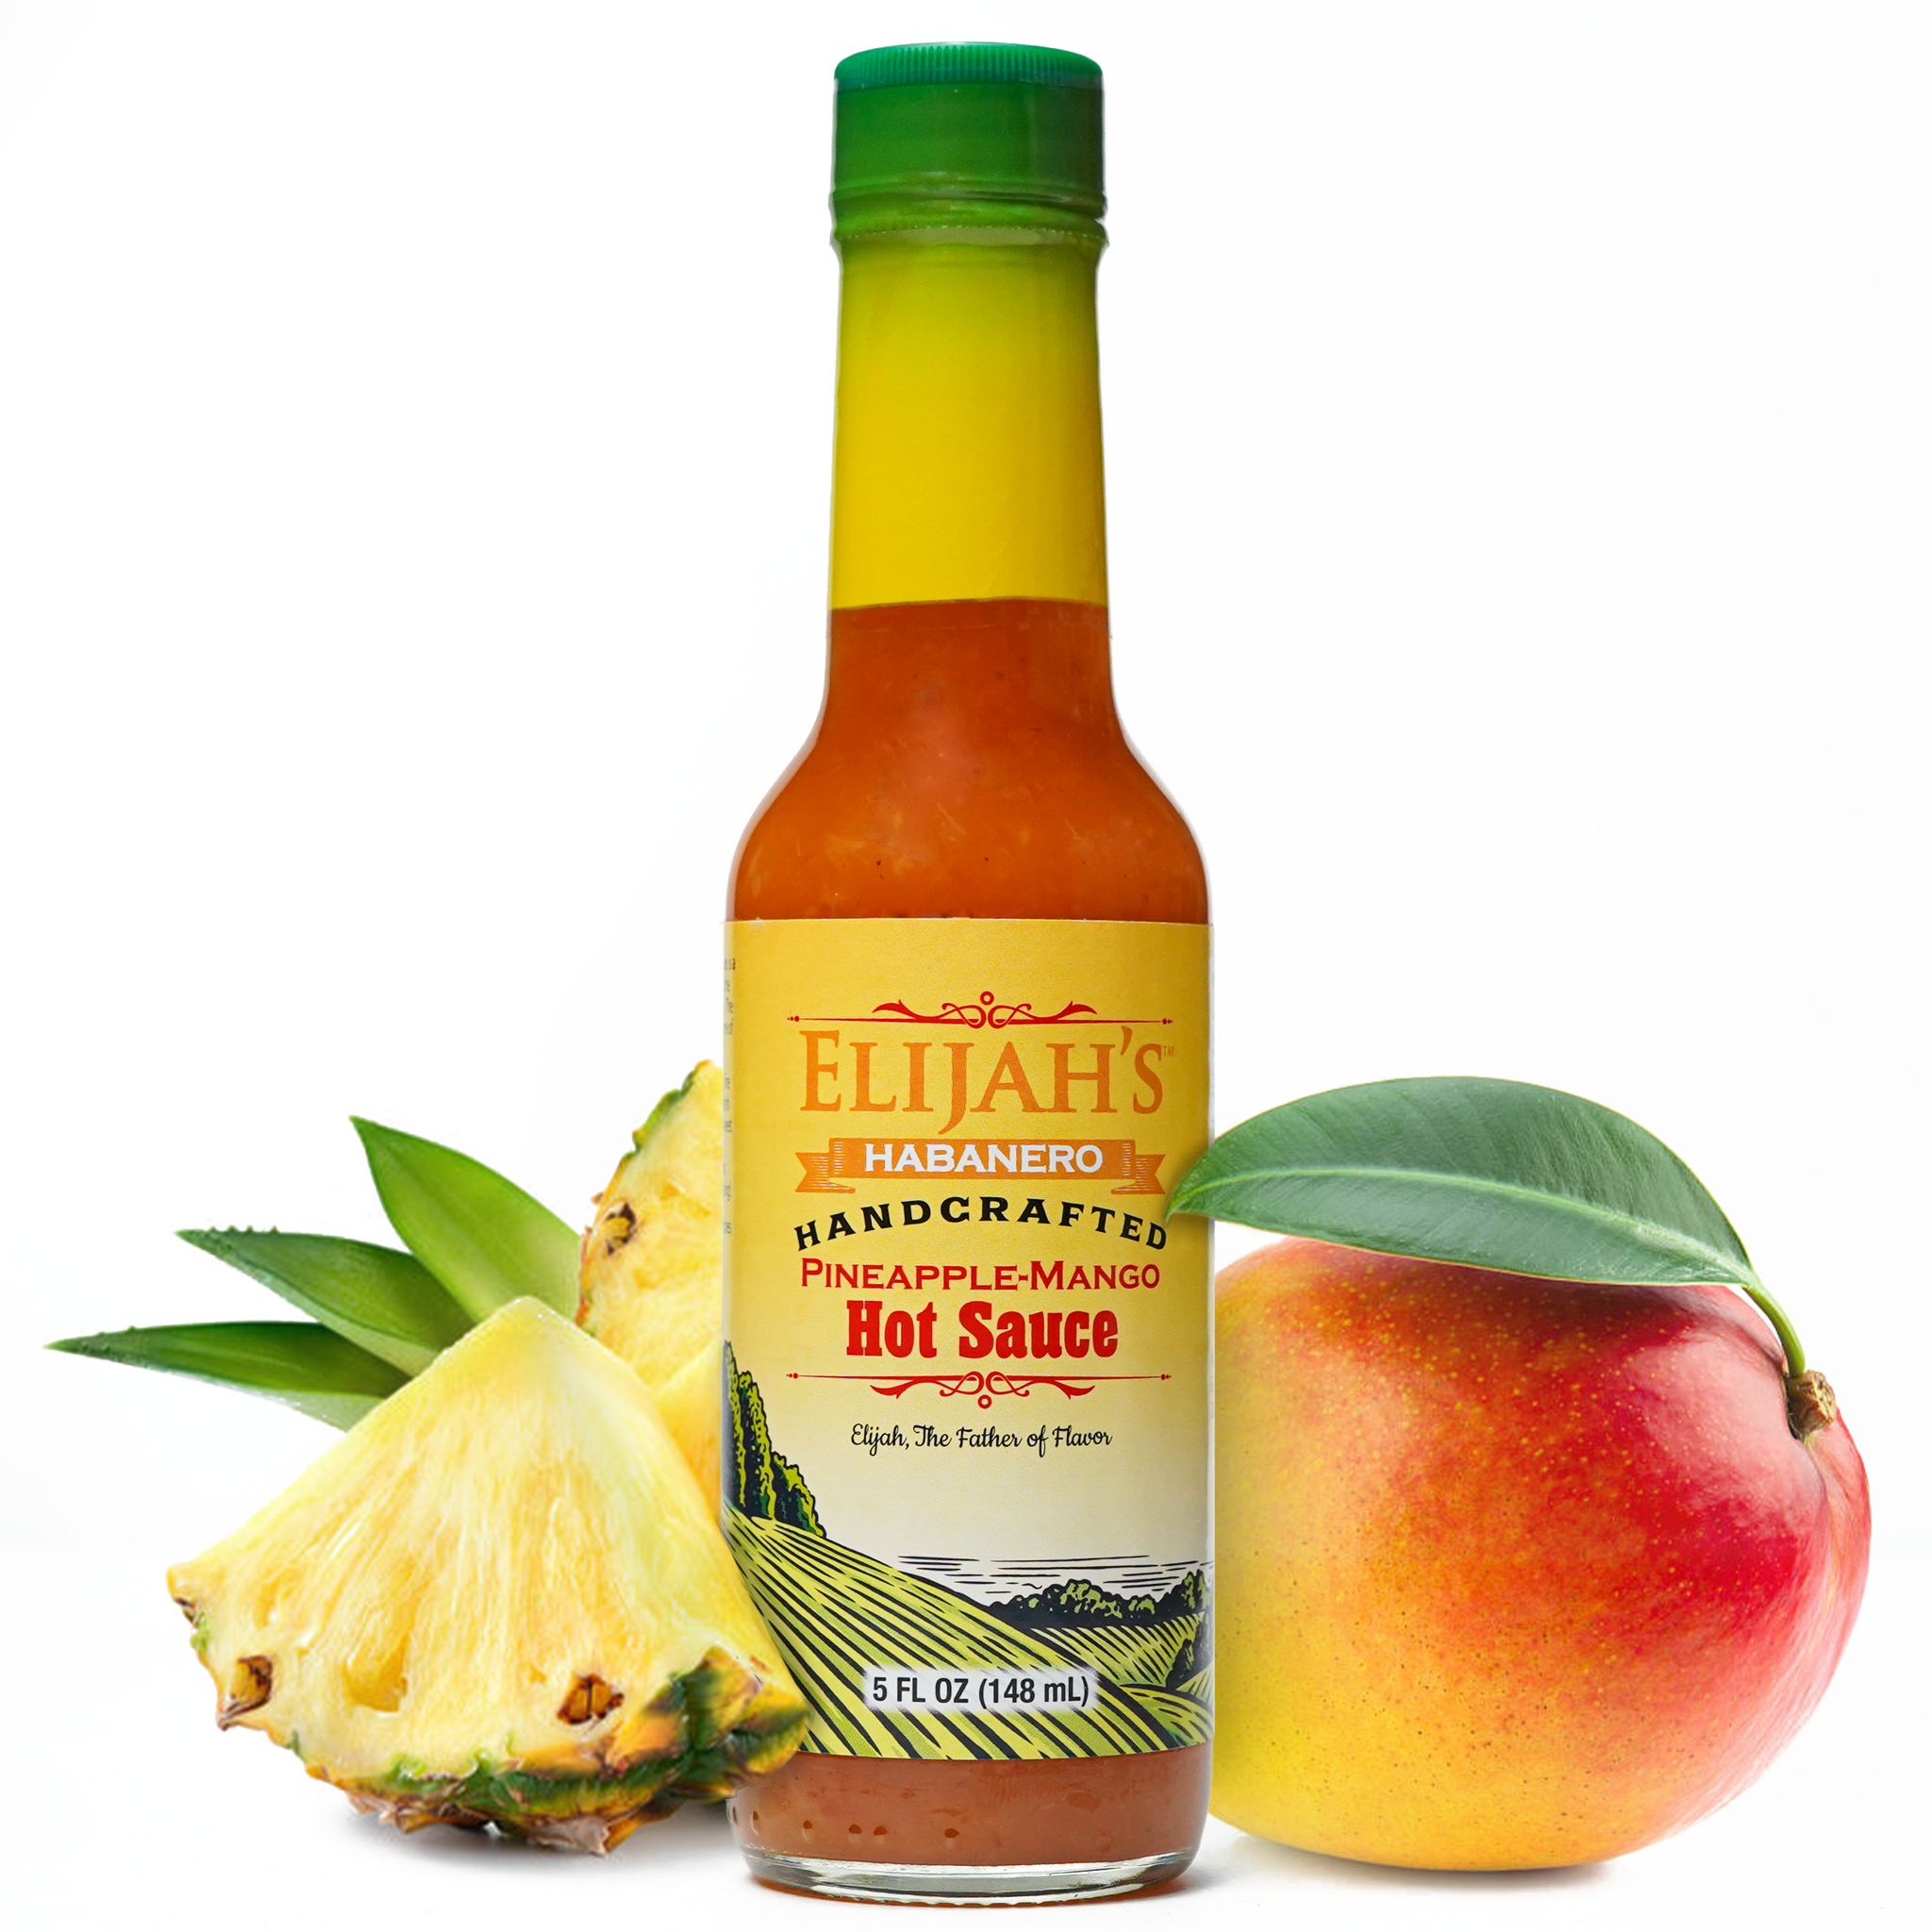 Pineapple-Mango Habanero Hot Sauce